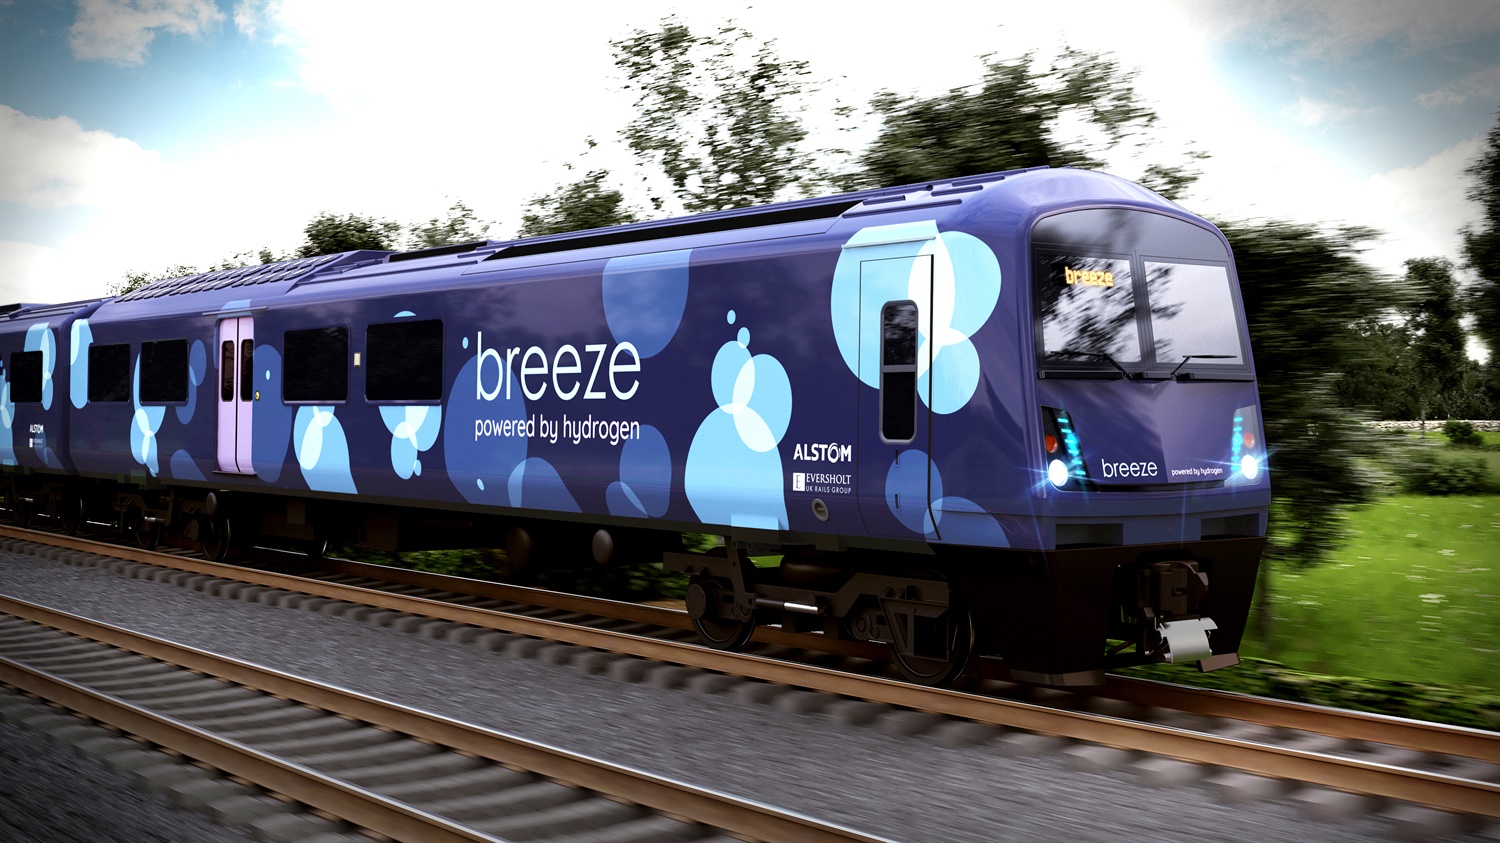 Introducing Alstom's Breeze trains